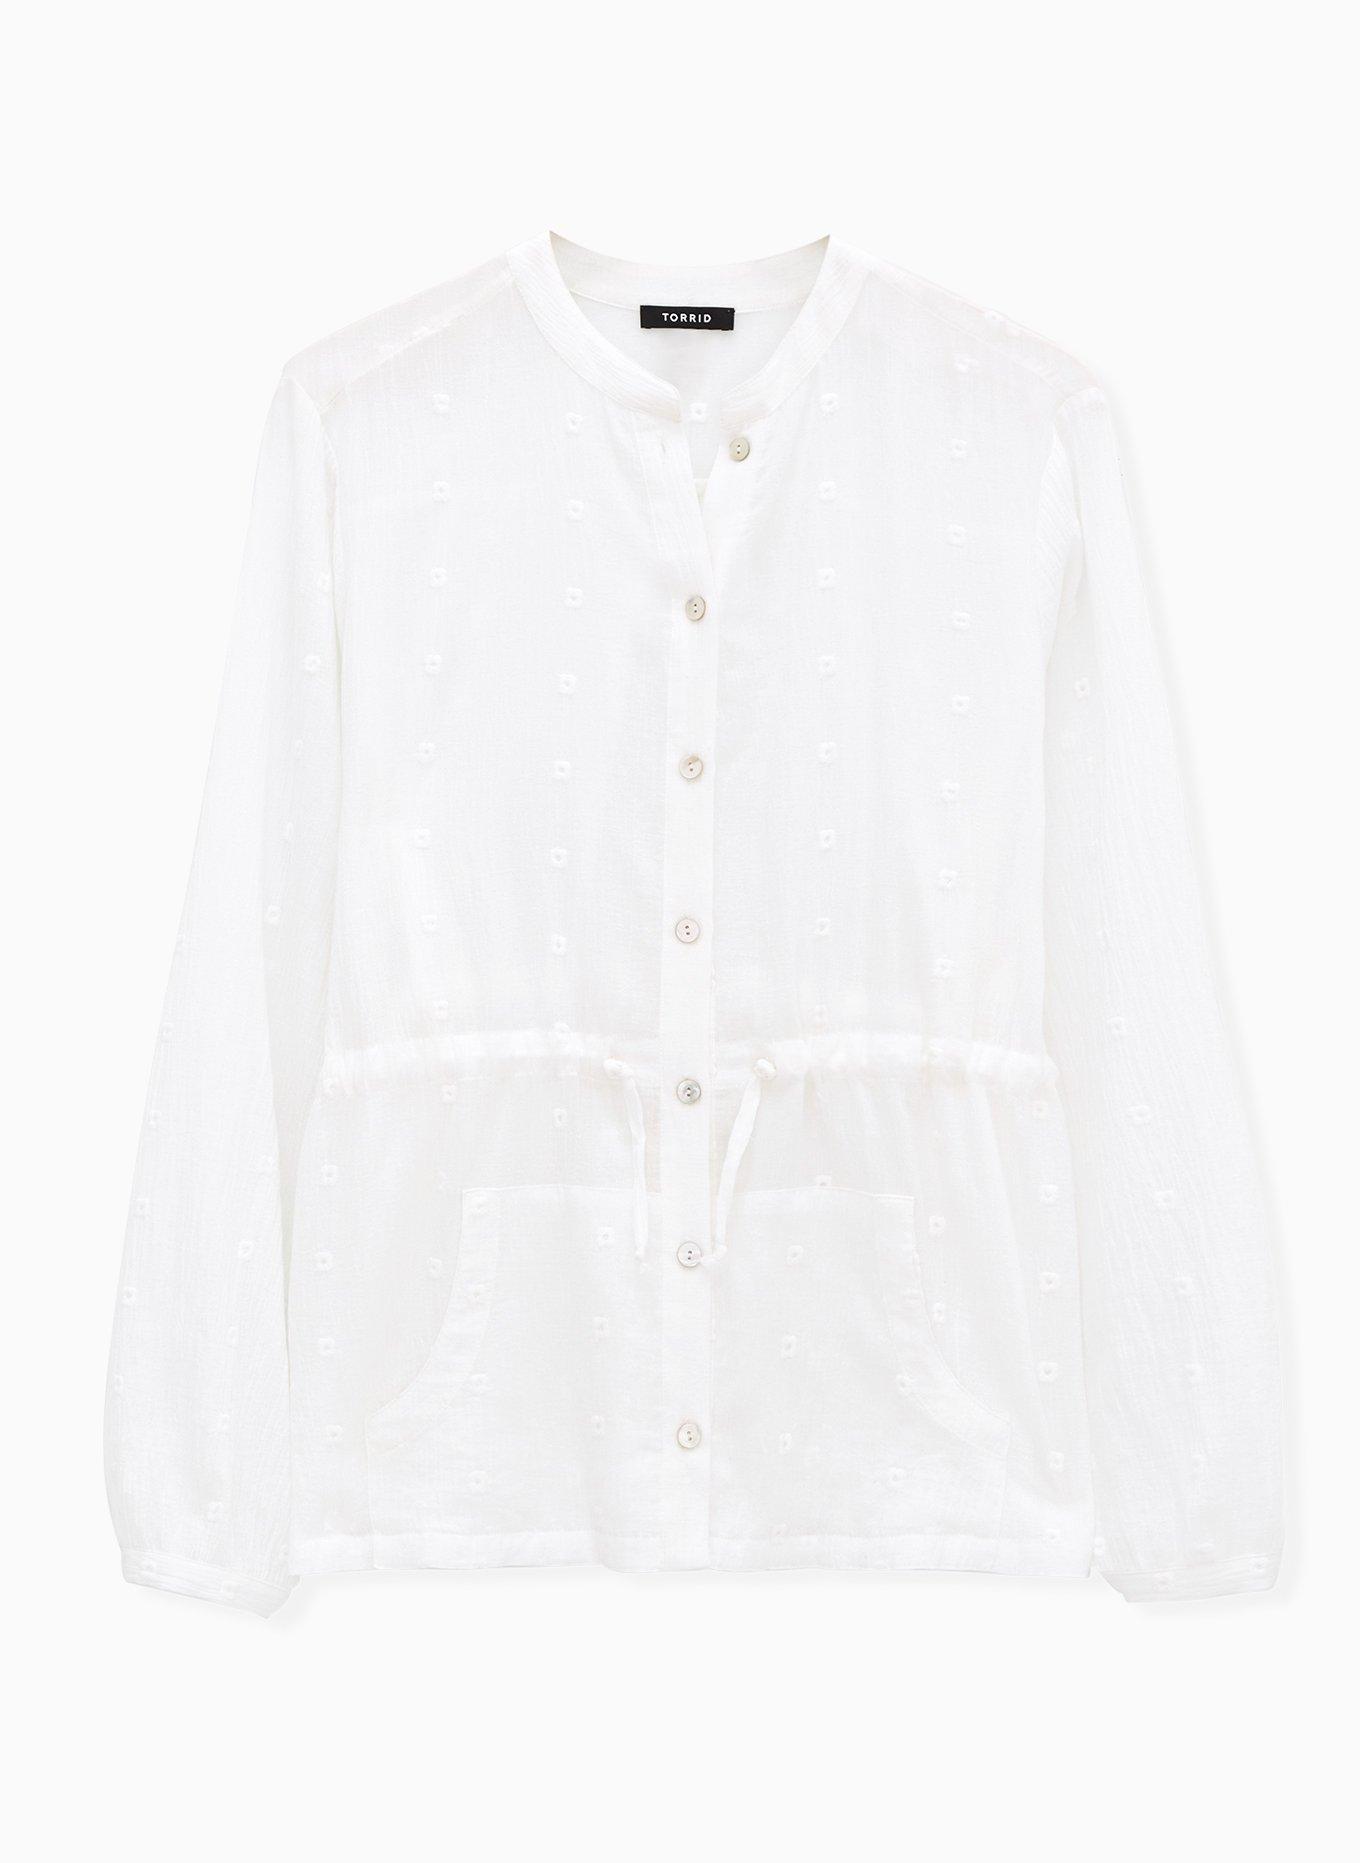 Plus Size - White Cotton Gauze Embroidered Jacket - Torrid